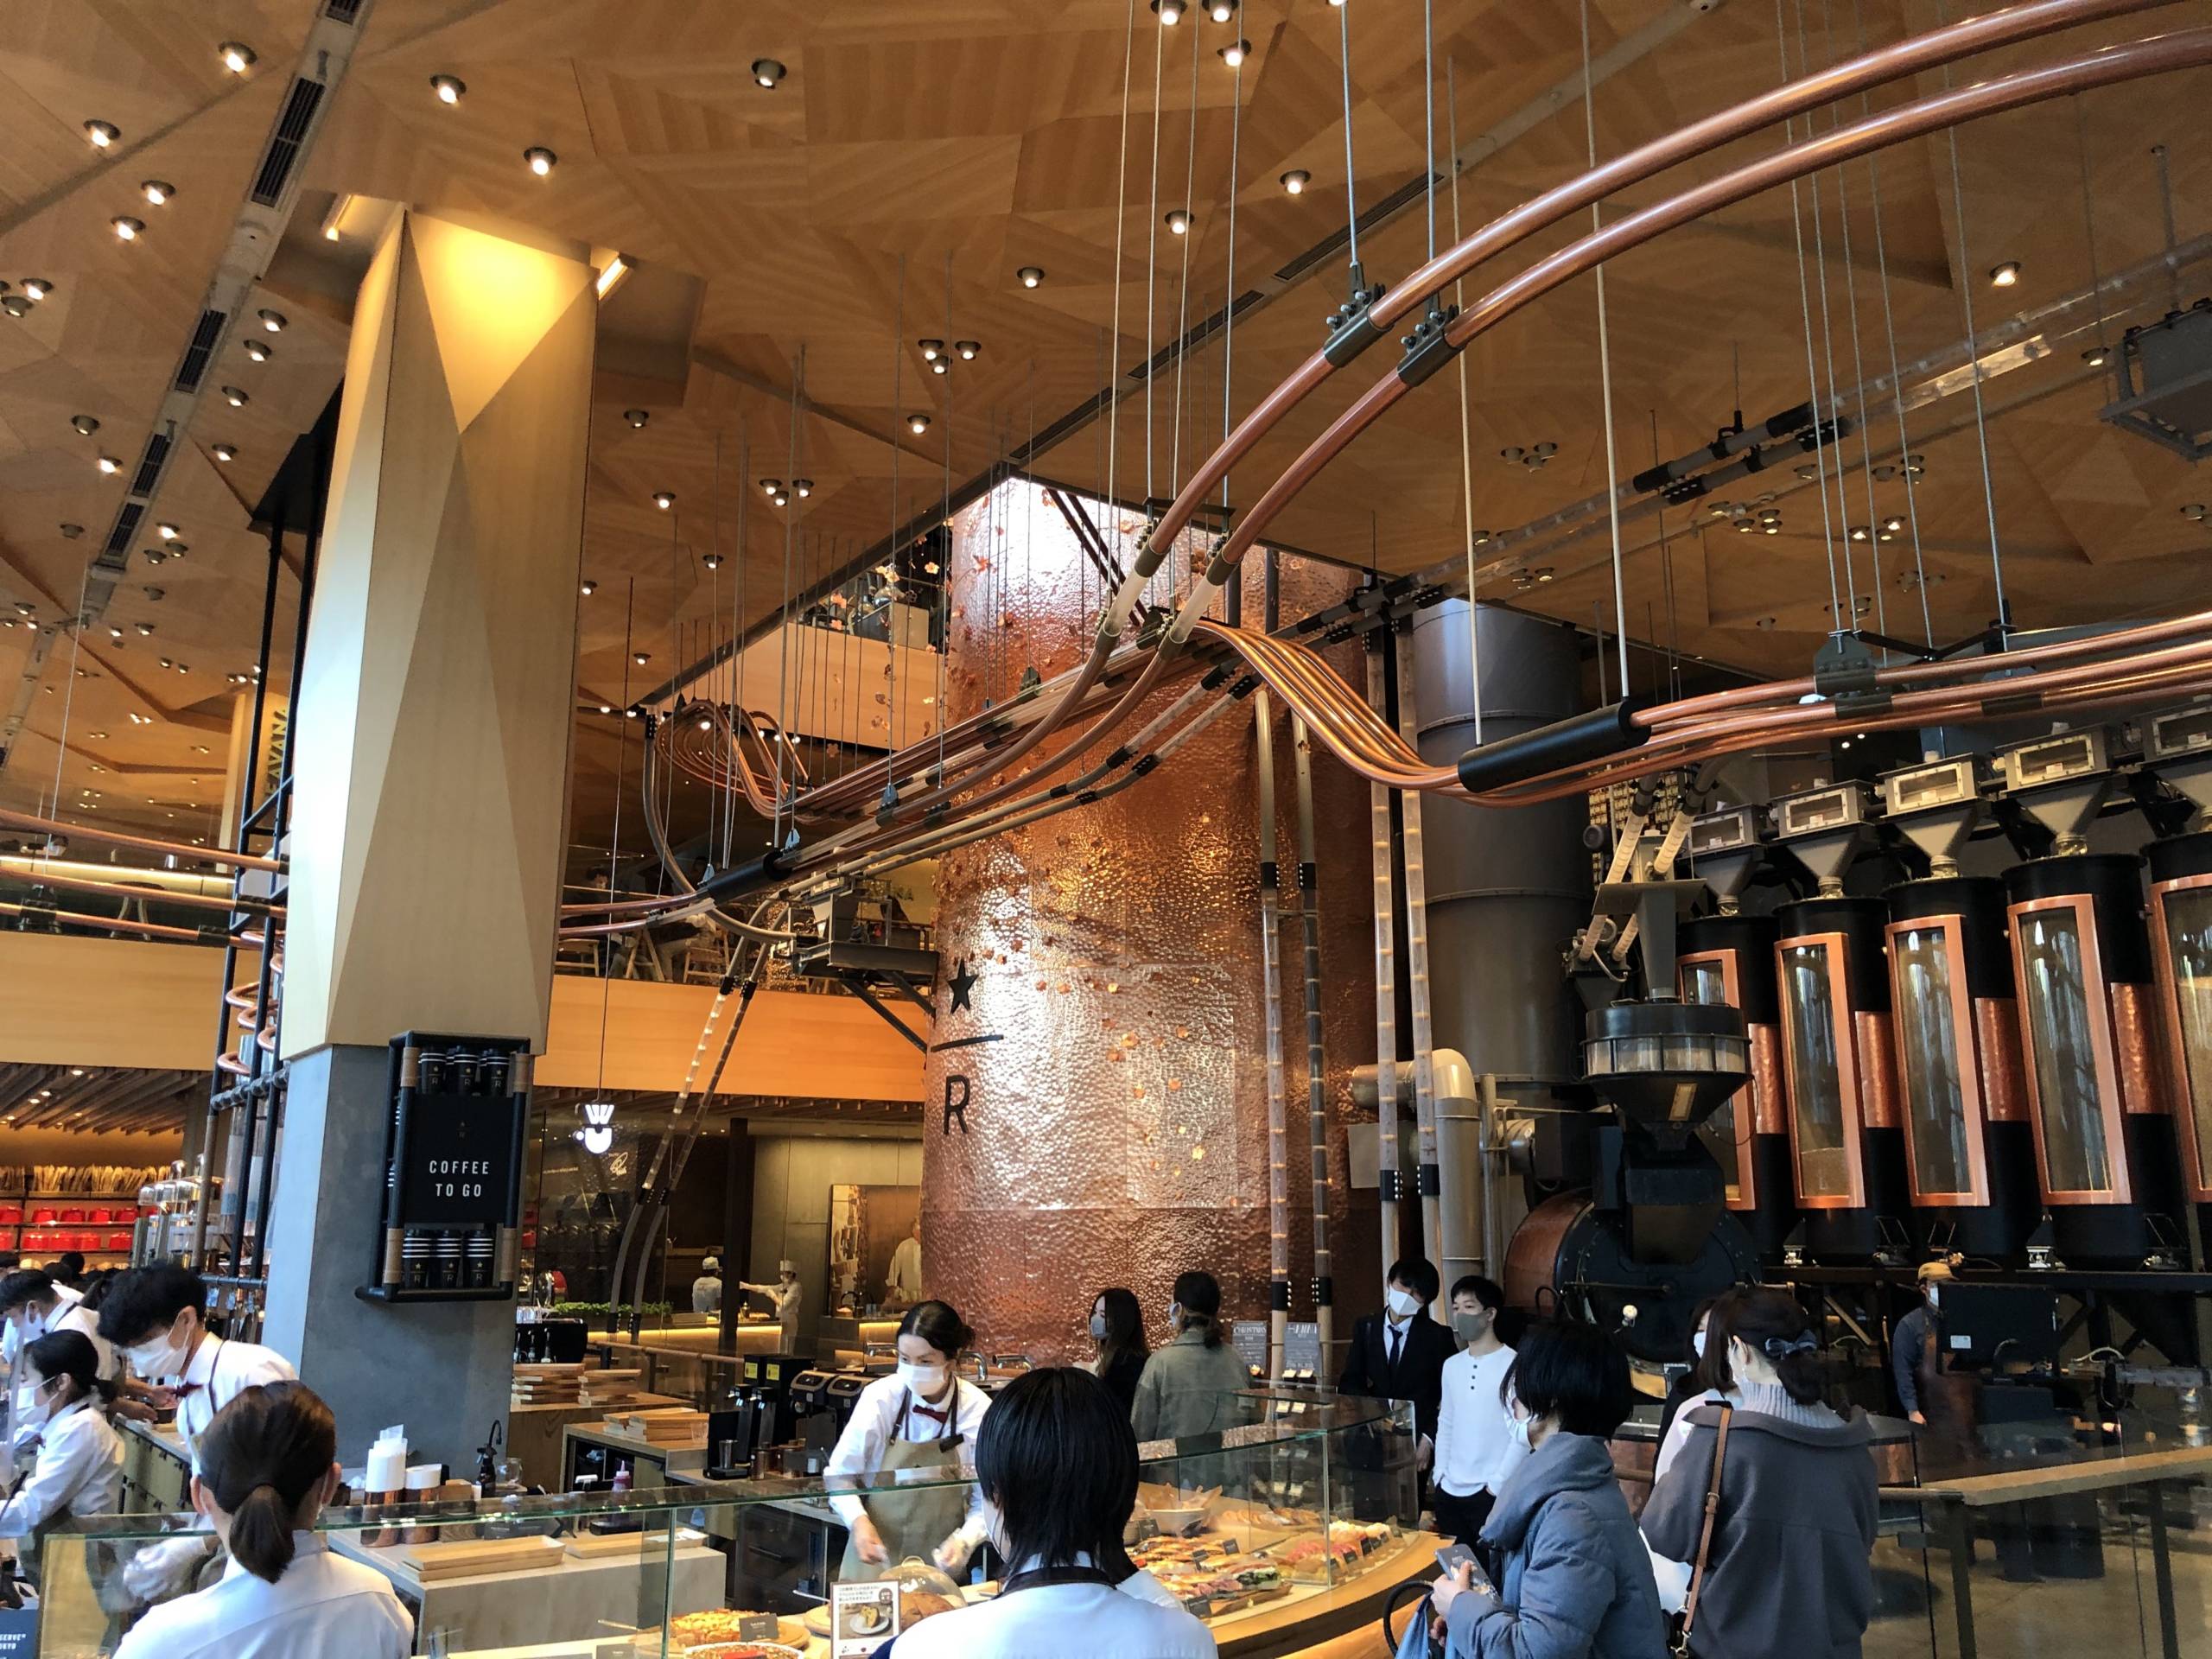 Starbucks Reserve Roastery en Tokio